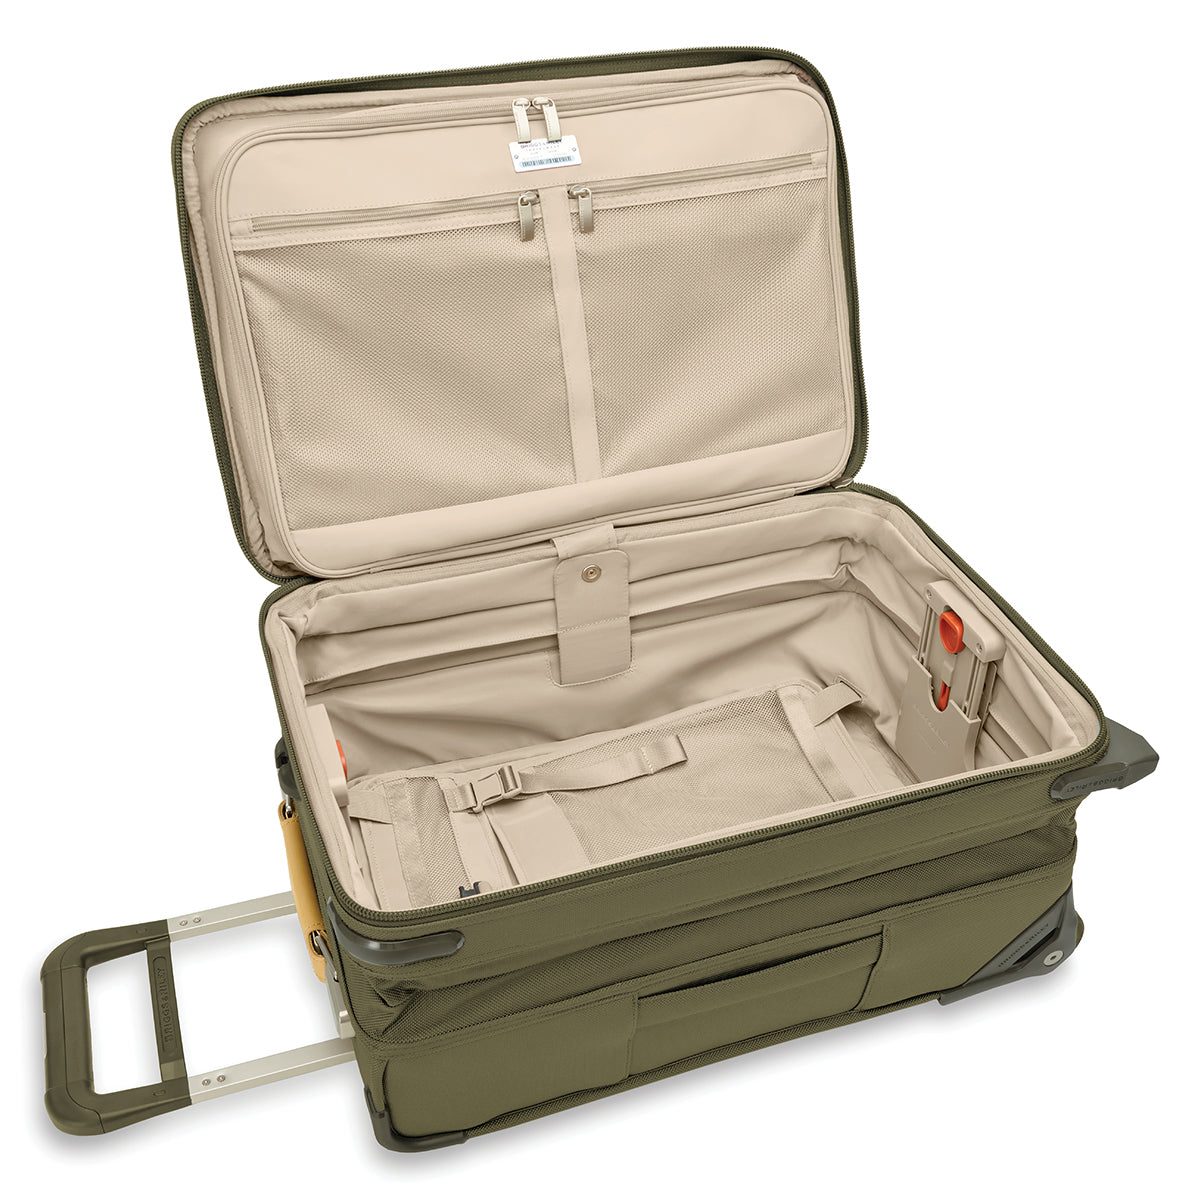 Briggs & Riley Baseline Essential 2-Wheel Carry-On Luggage